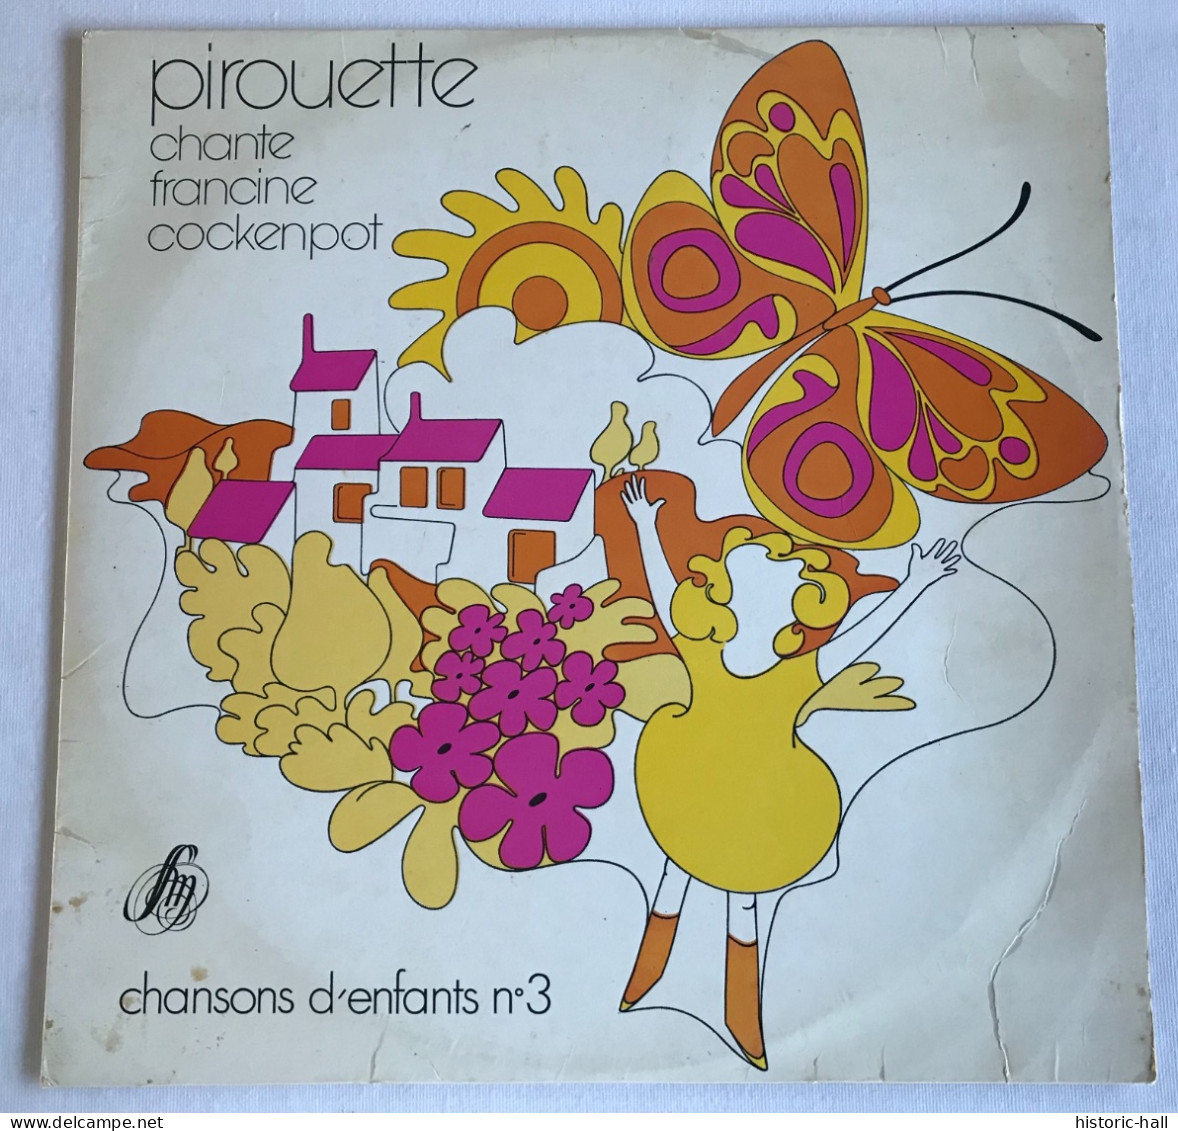 PIROUETTE - Chante Francine Cockenpot - LP - 1972 - French Press - Kinderen